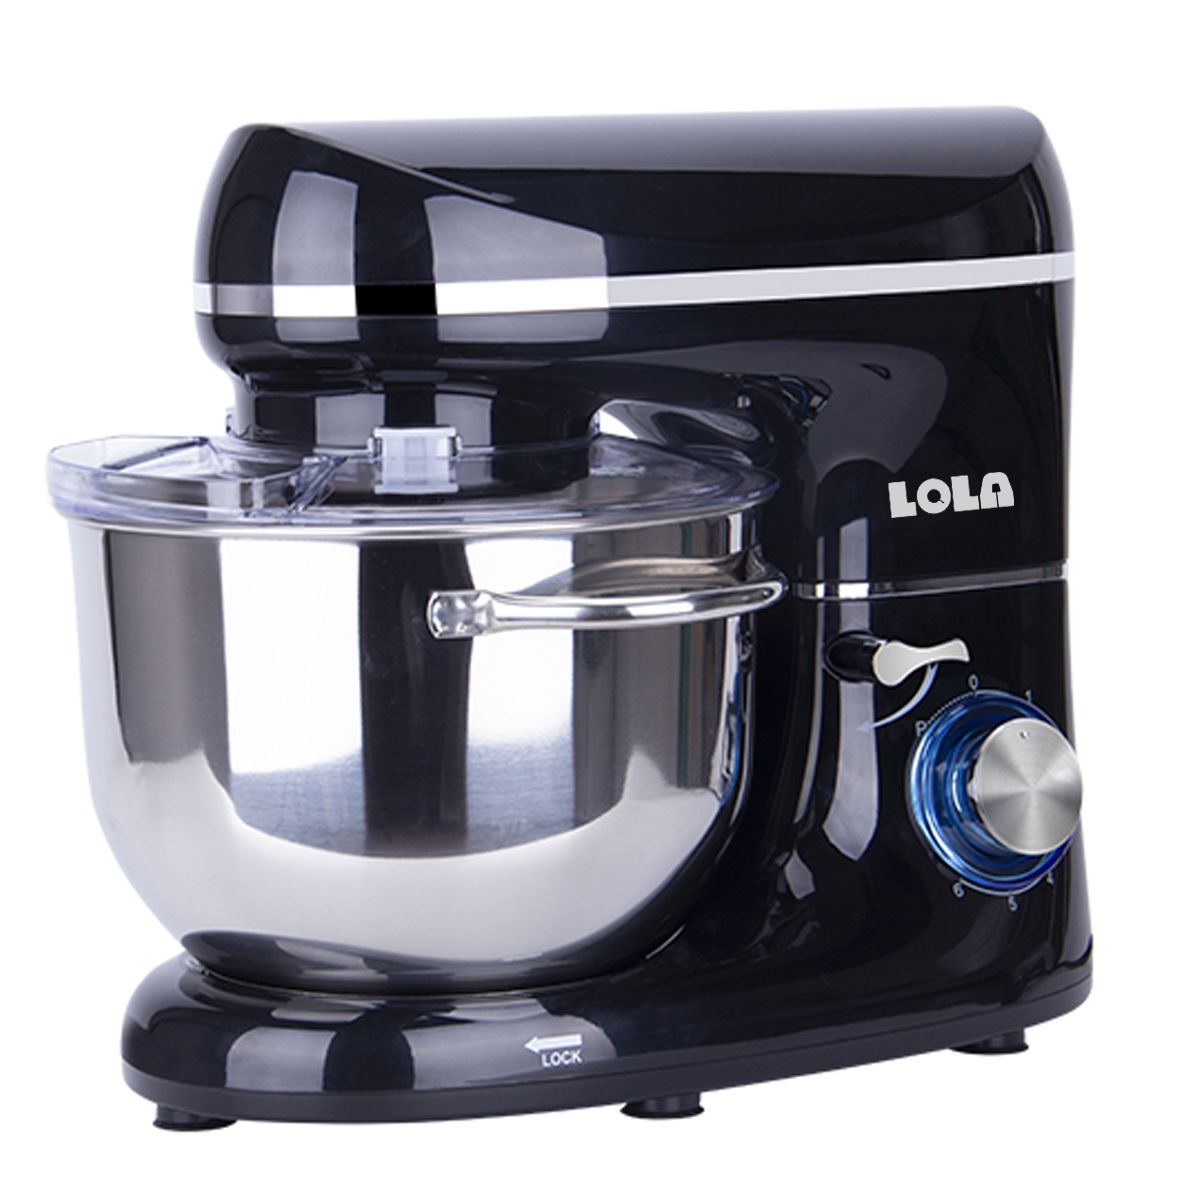 Lola 5.5L Stand Mixer 1100W Kitchen Machine Stand Bowl Mixer for Baking ...